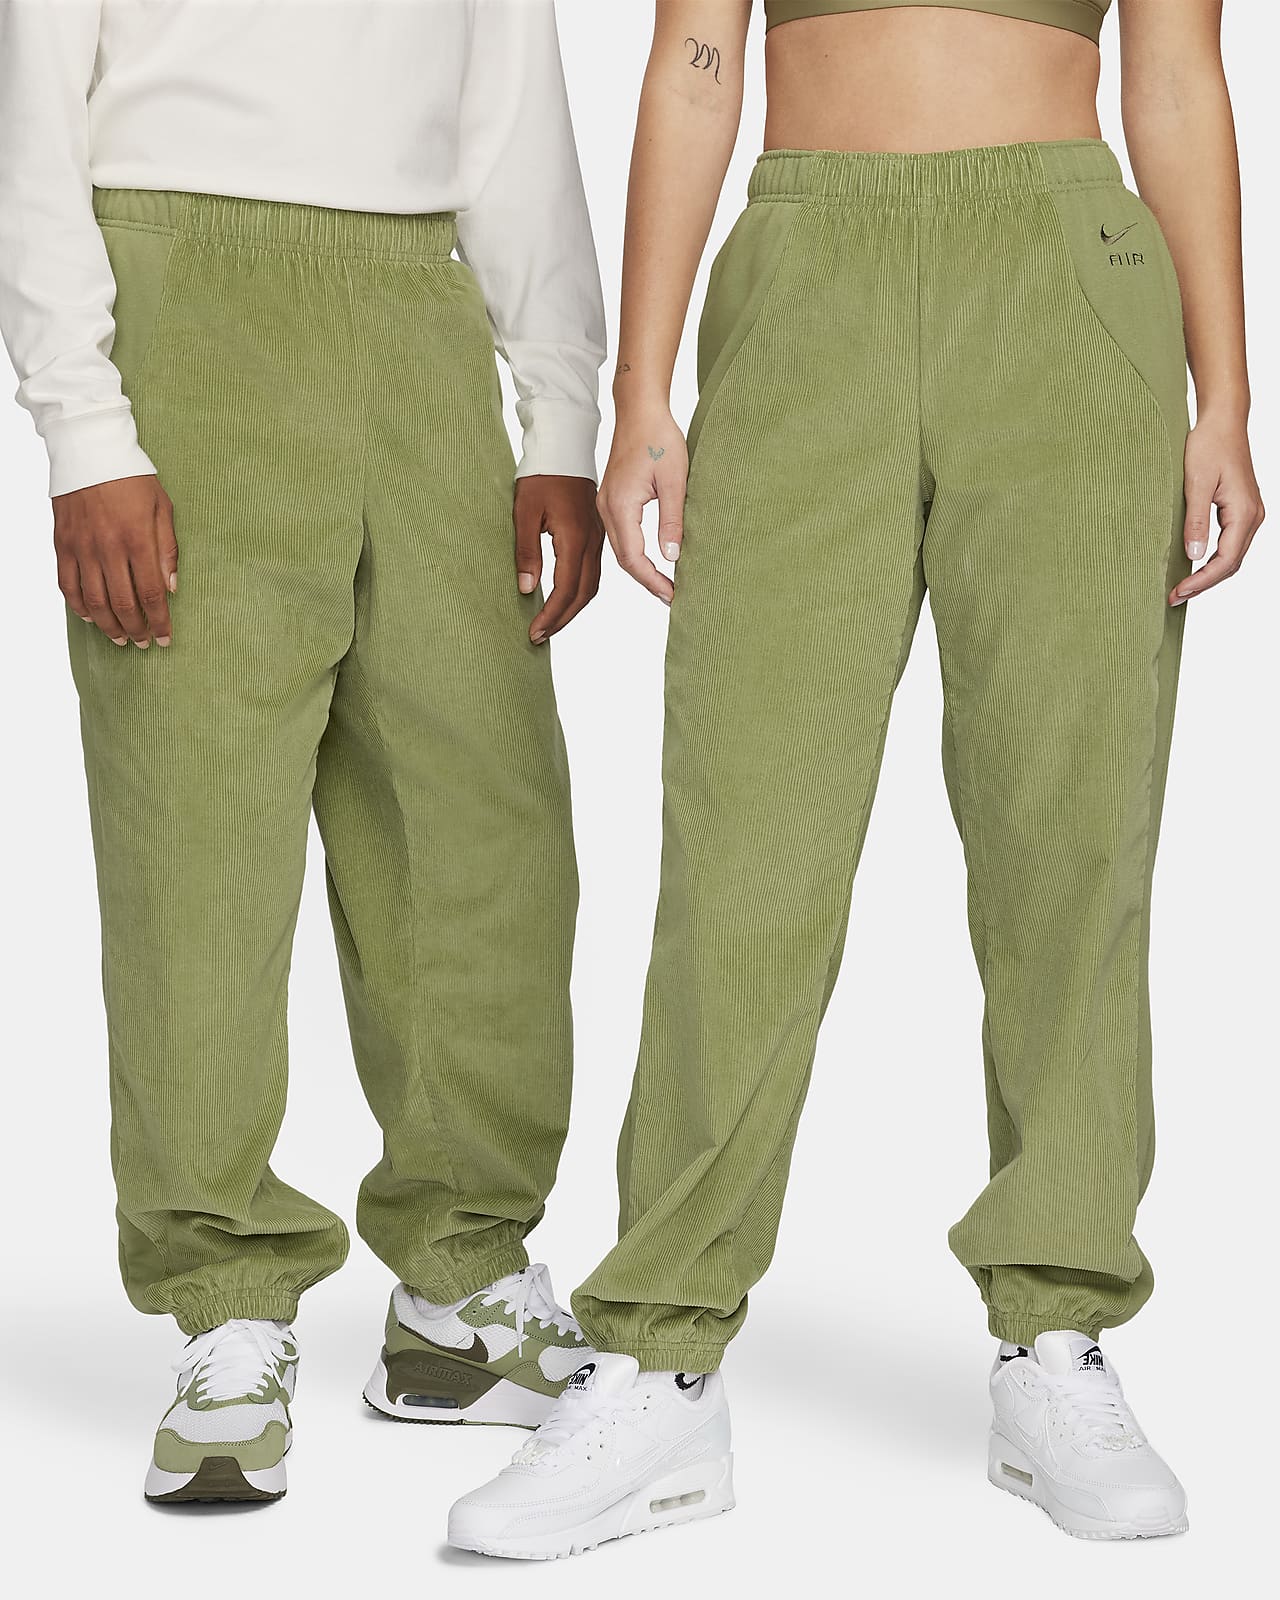 Next Pantalon de pluie - khaki green/vert 